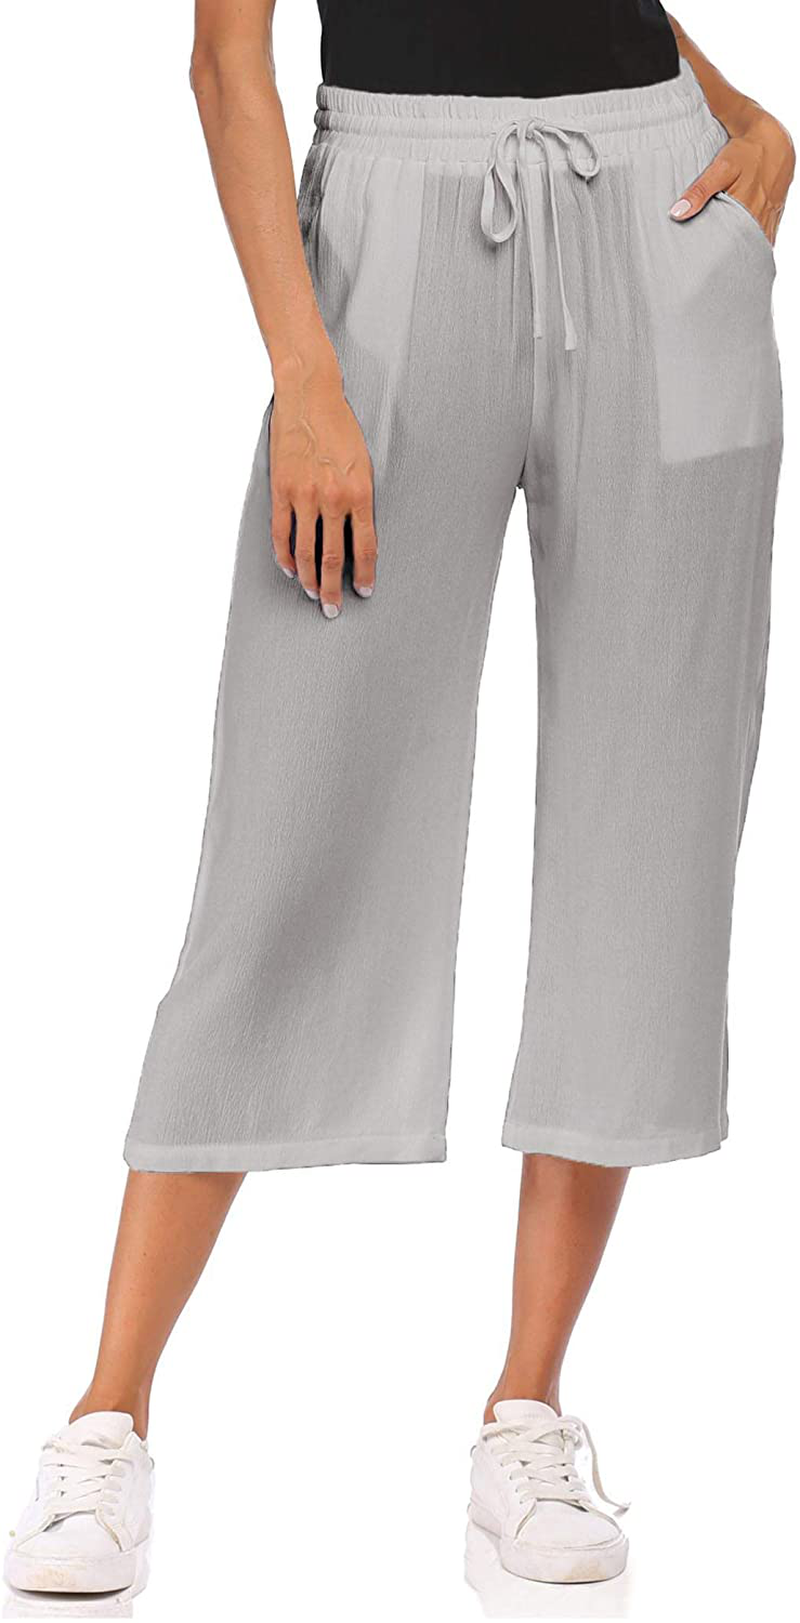 Wildtrest Women's Drawstring Cropped Wide Leg Pants Casual Loose Cotton Capri Trouser